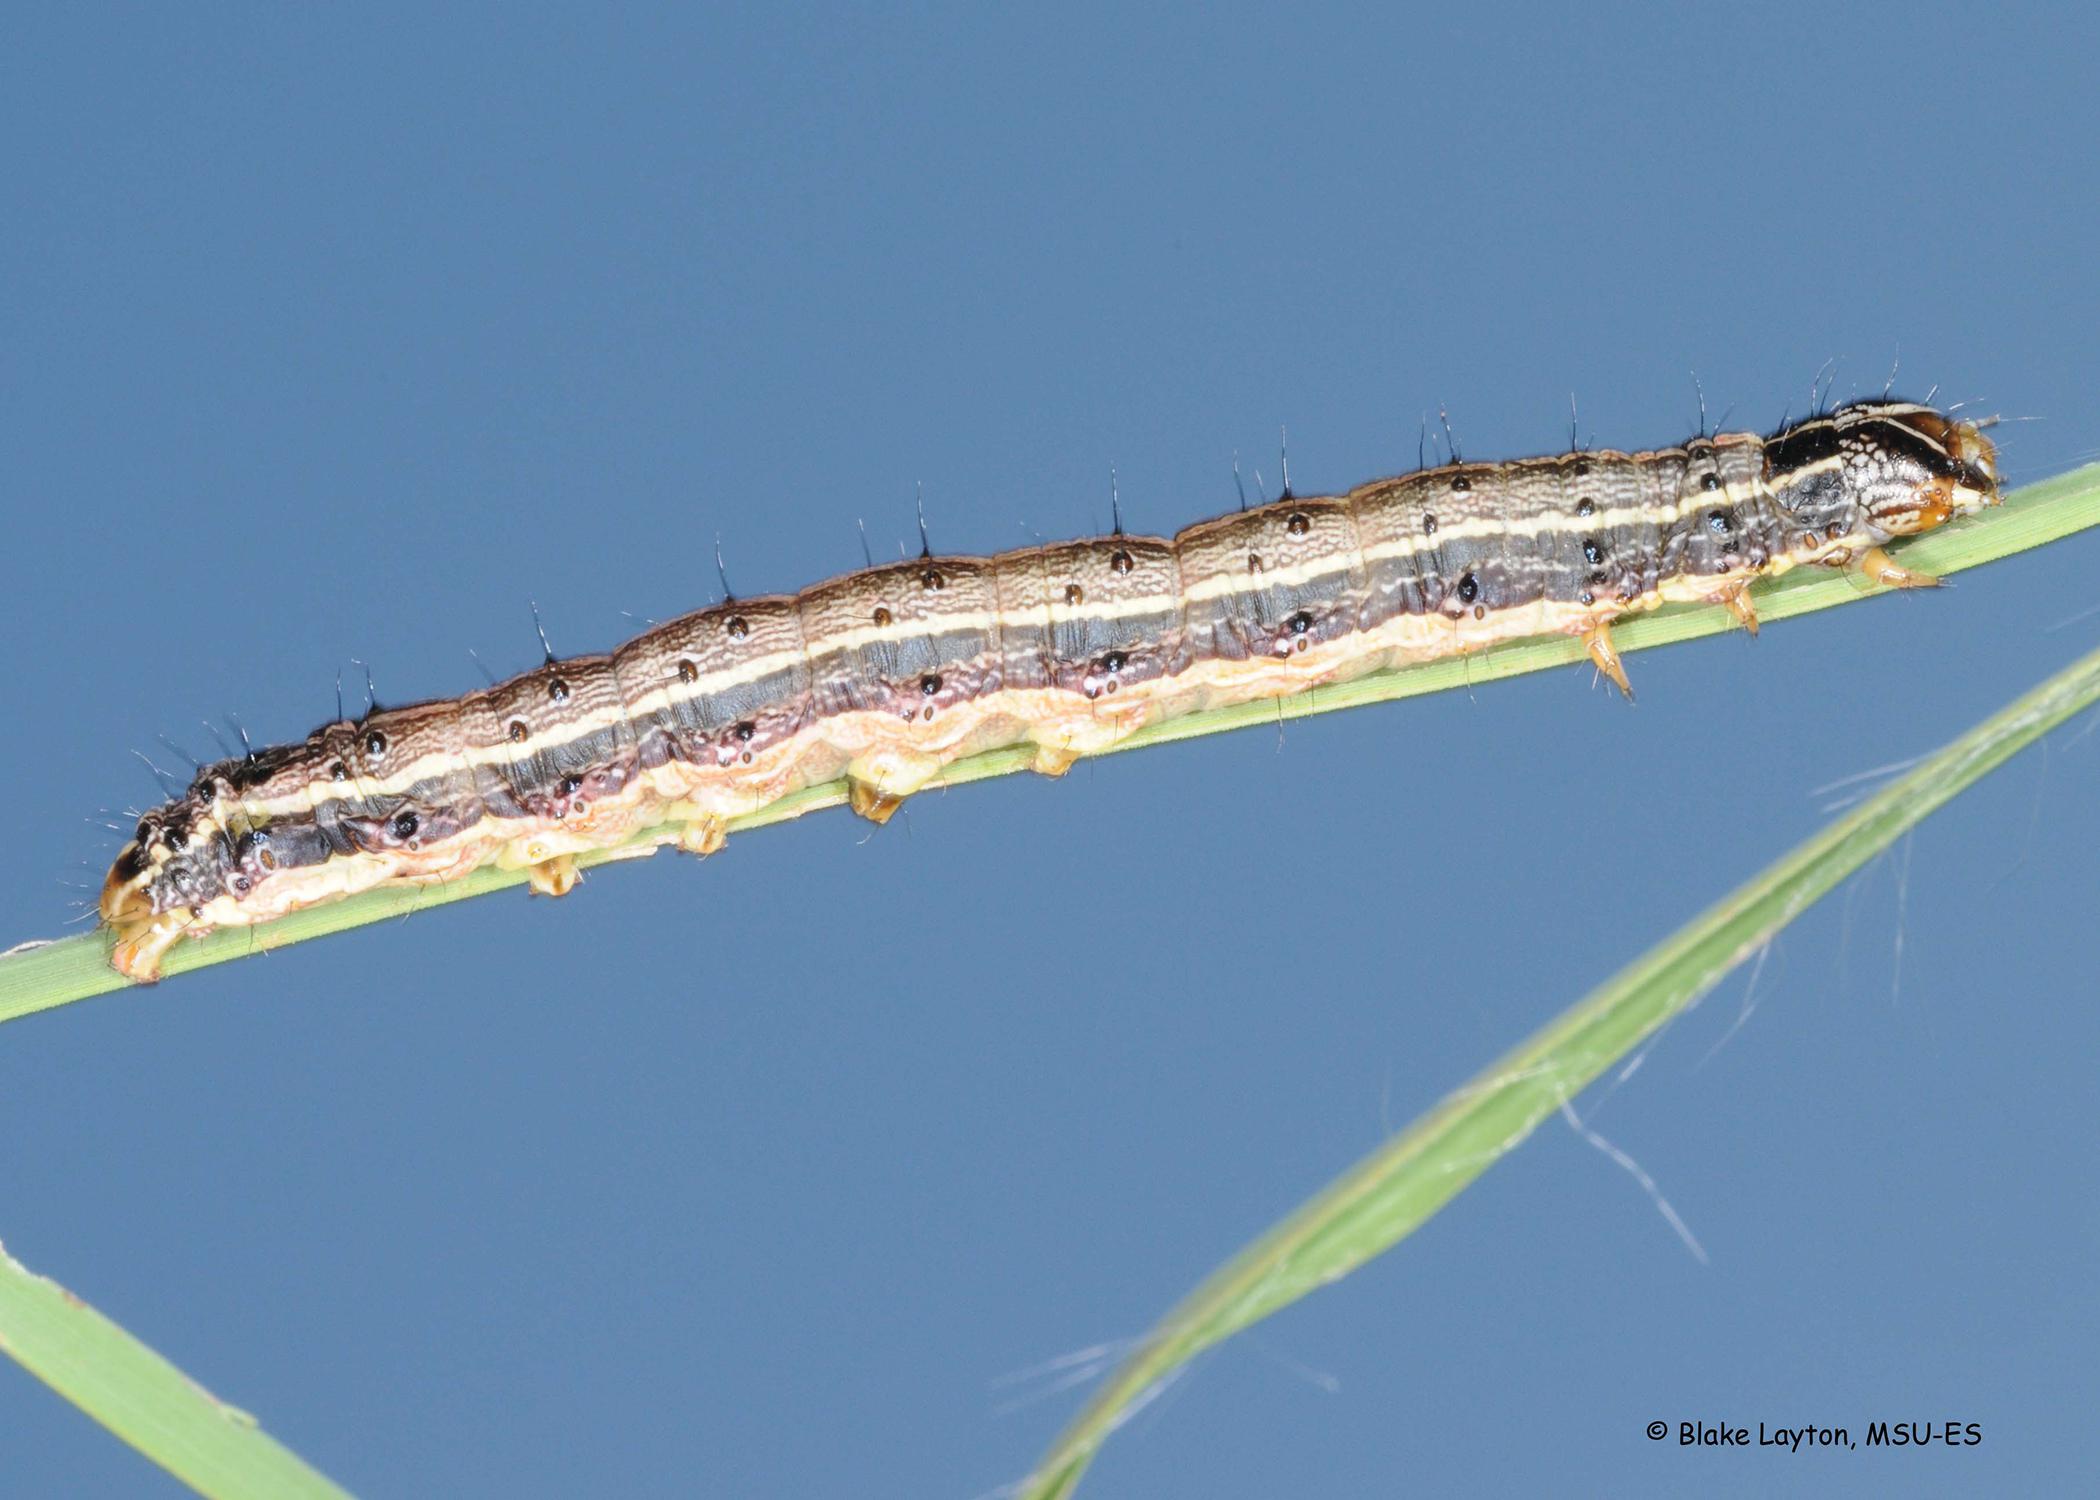 A brown caterpillar rests on a blade of grass.